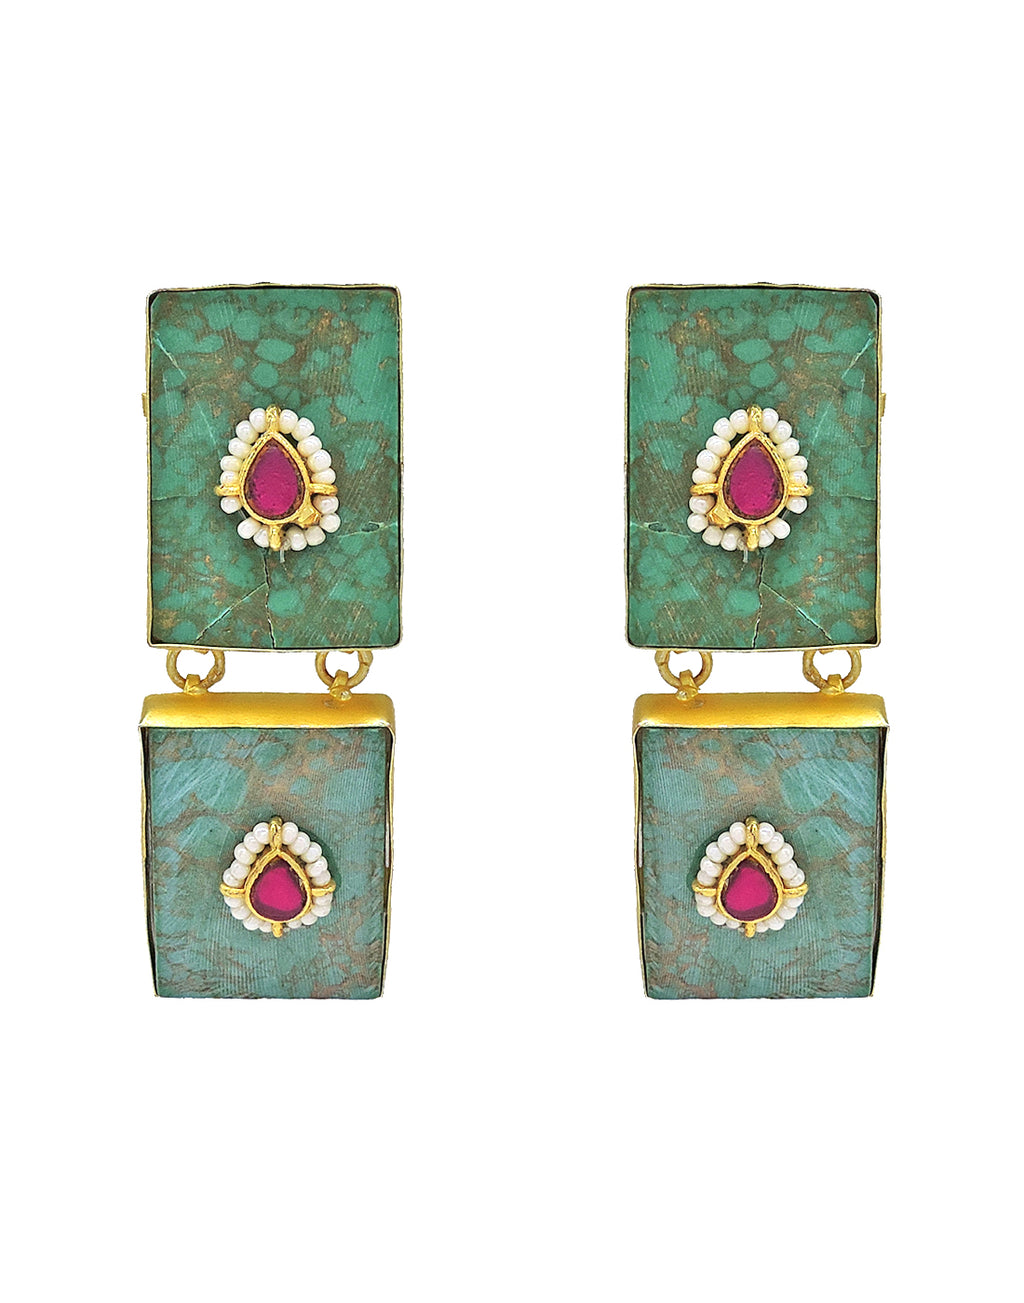 Twin Bhatti Earrings - Statement Earrings - Gold-Plated & Hypoallergenic - Made in India - Dubai Jewellery - Dori